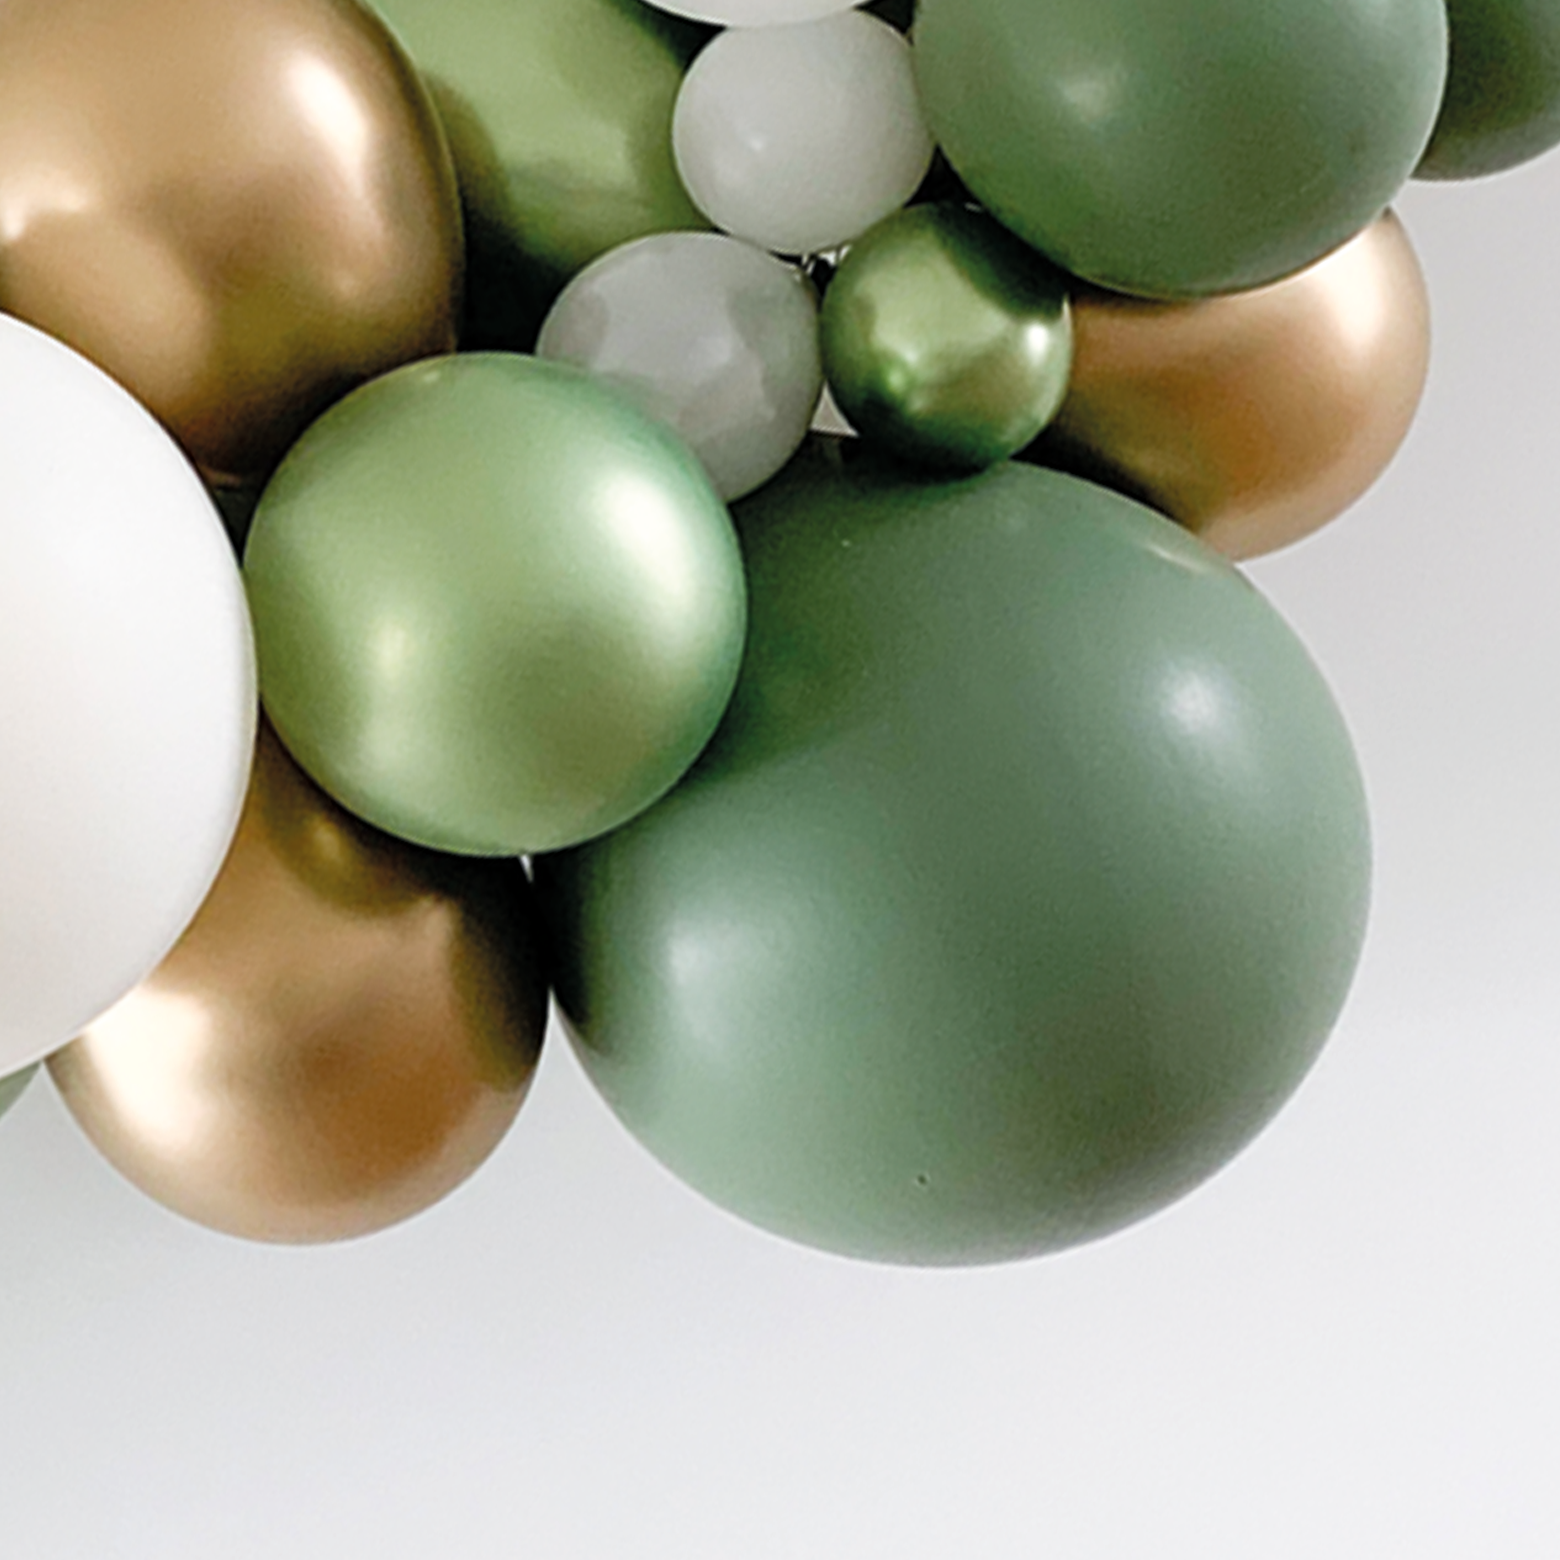 Ballonslinger ballonnenboog eucalyptus olijf groen goud wit als feestdecoratie